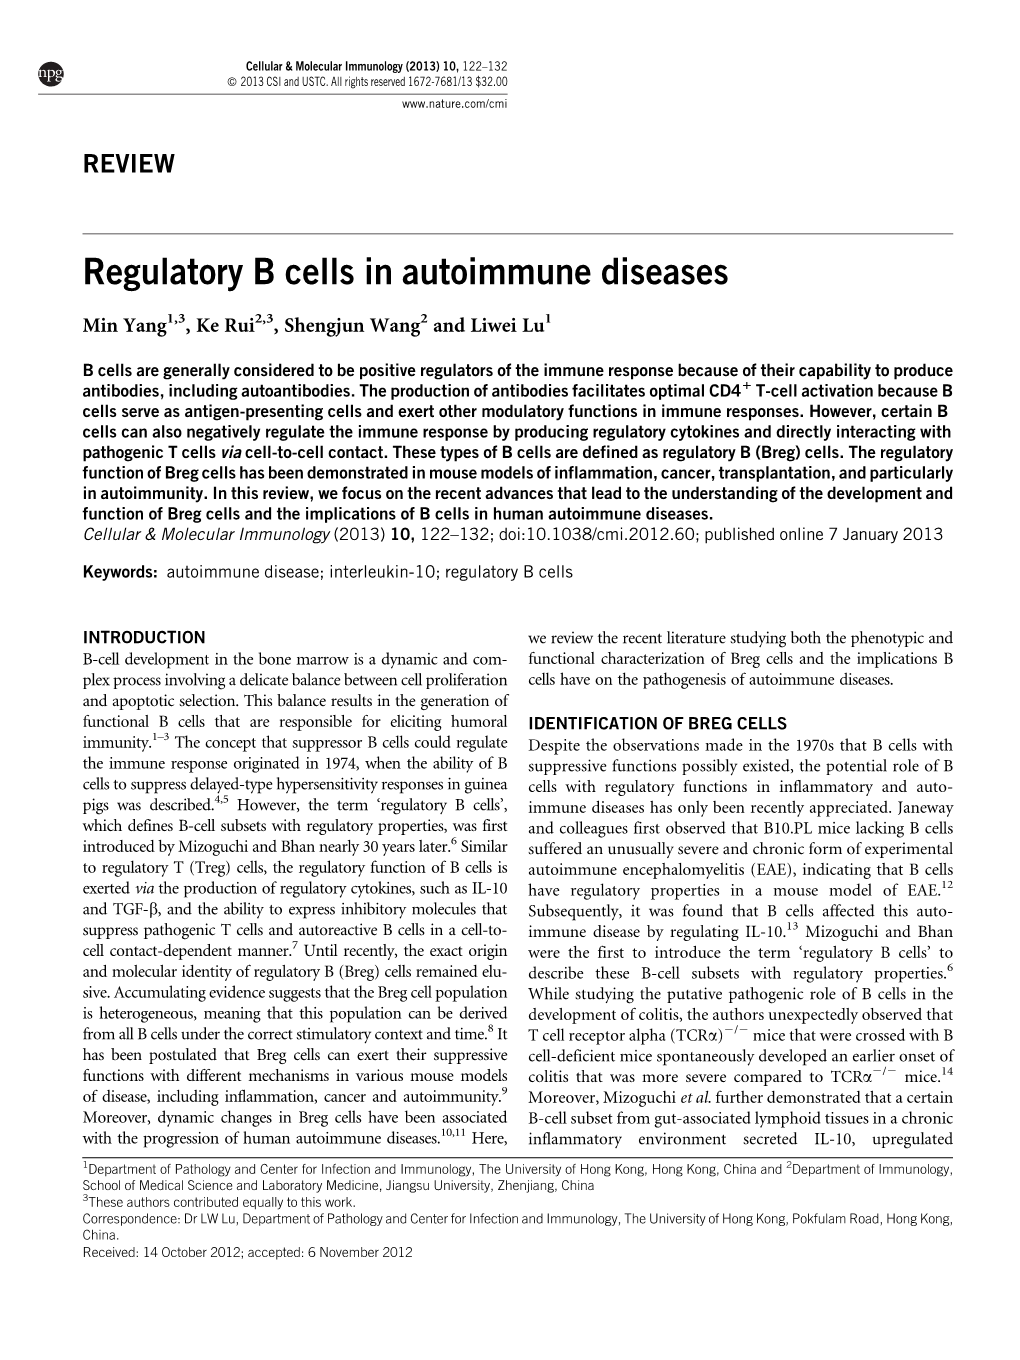 Regulatory B Cells in Autoimmune Diseases